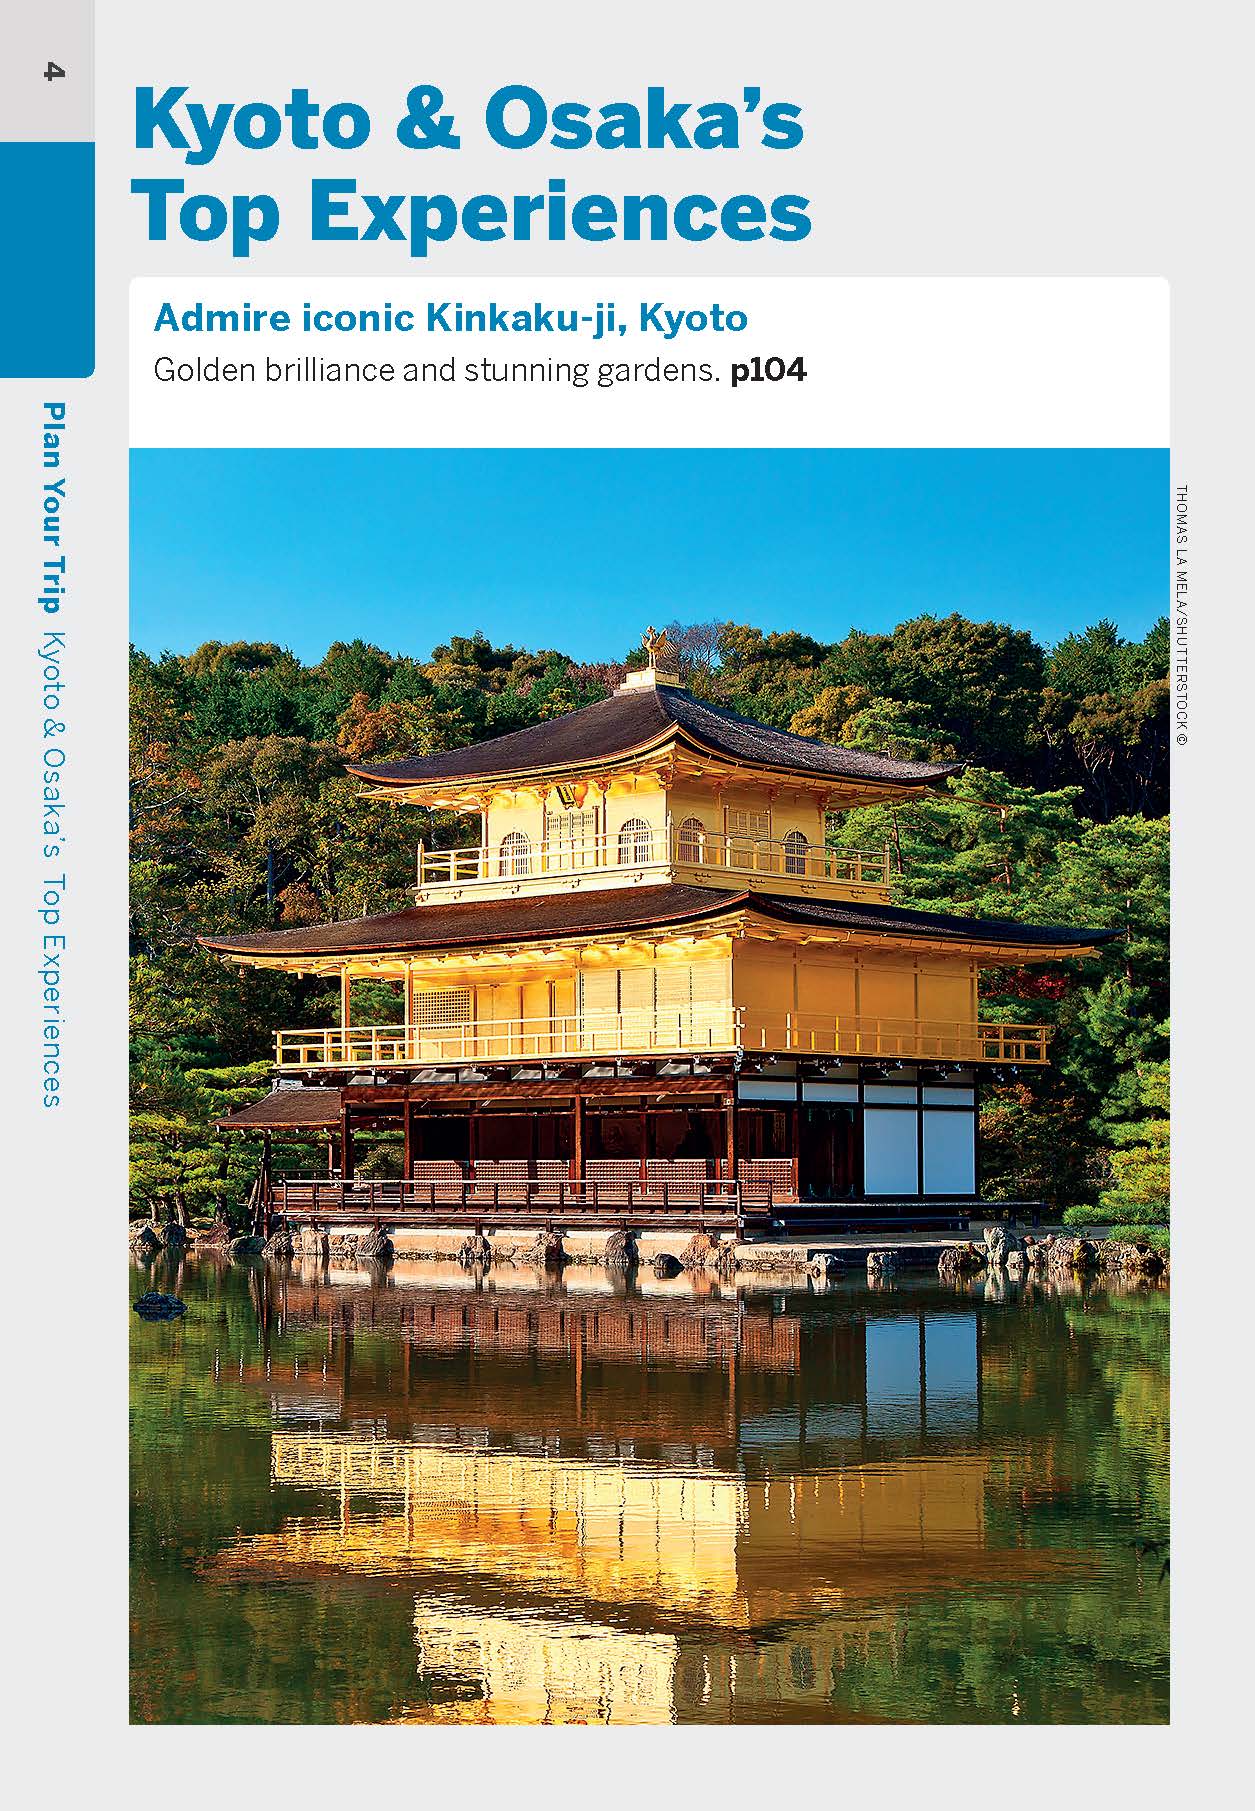 Pocket Kyoto & Osaka - Book + eBook